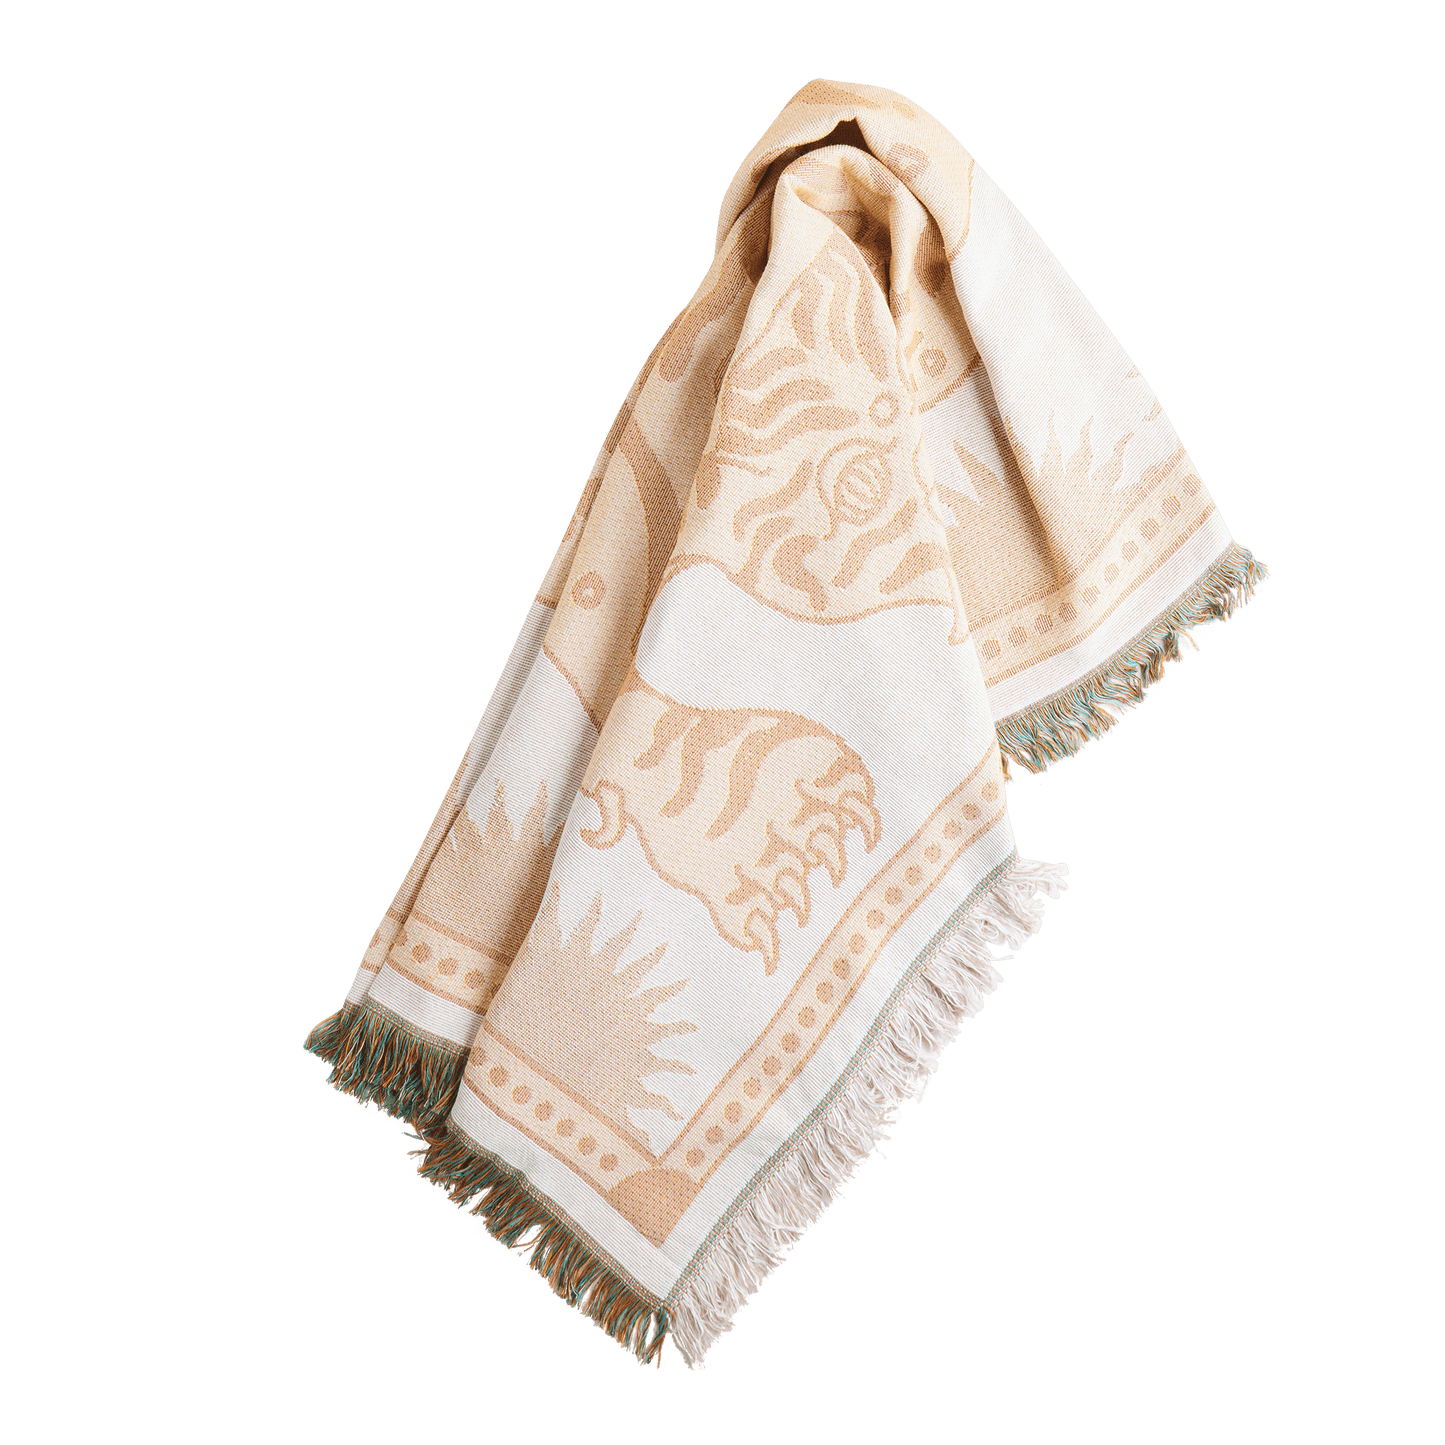 Tibetan Tiger Woven Blanket in warm beige